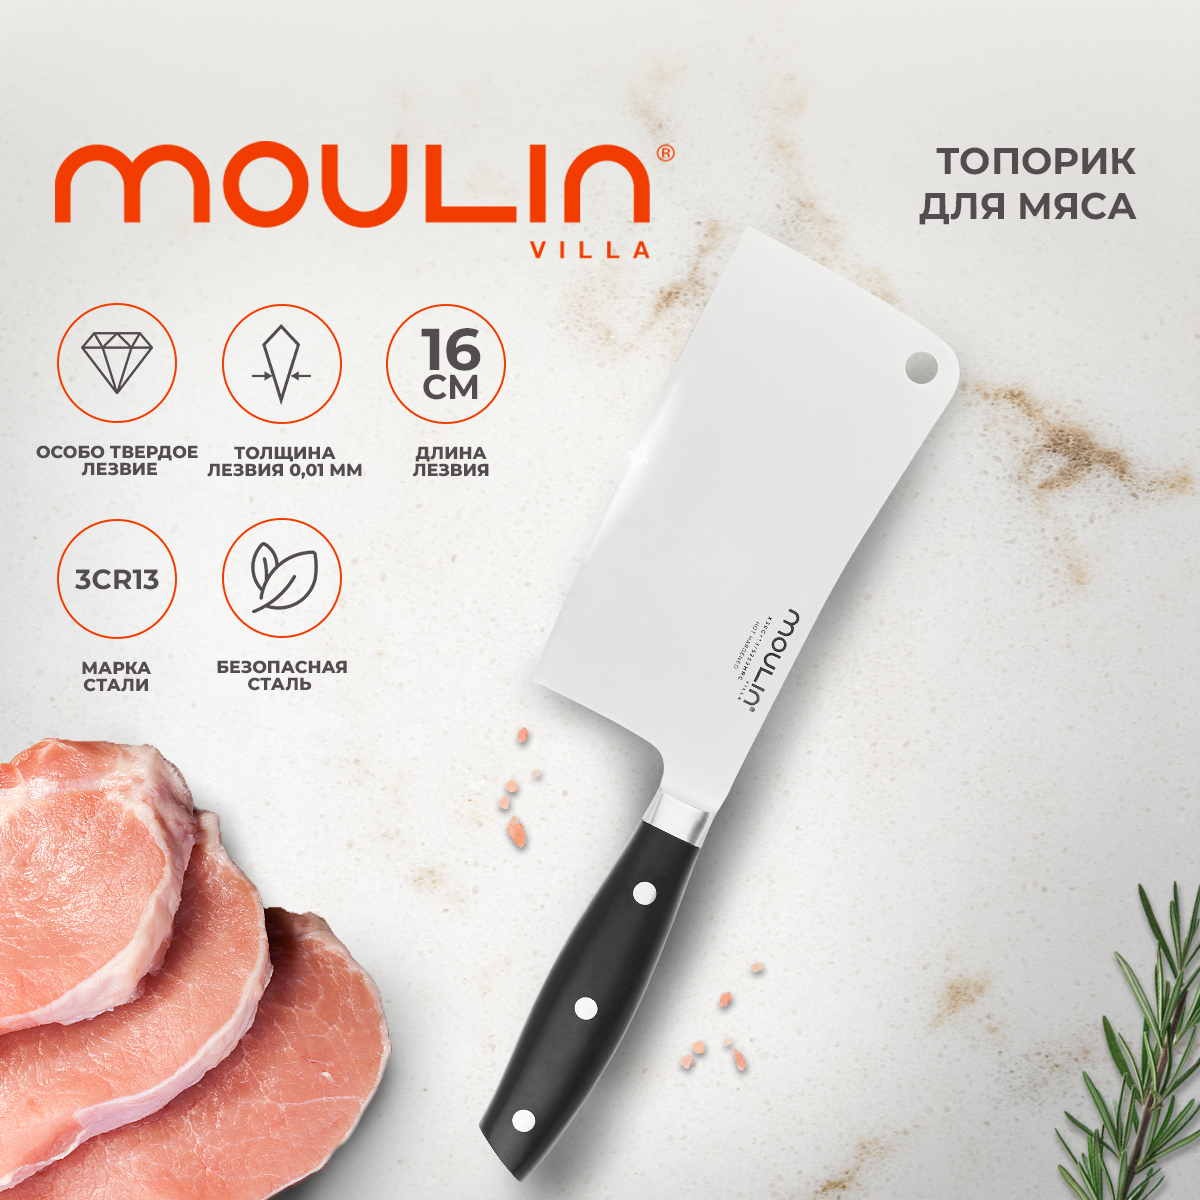 Tопорик для мяса 16 см Moulin Villa "Aimi", MCLA-016